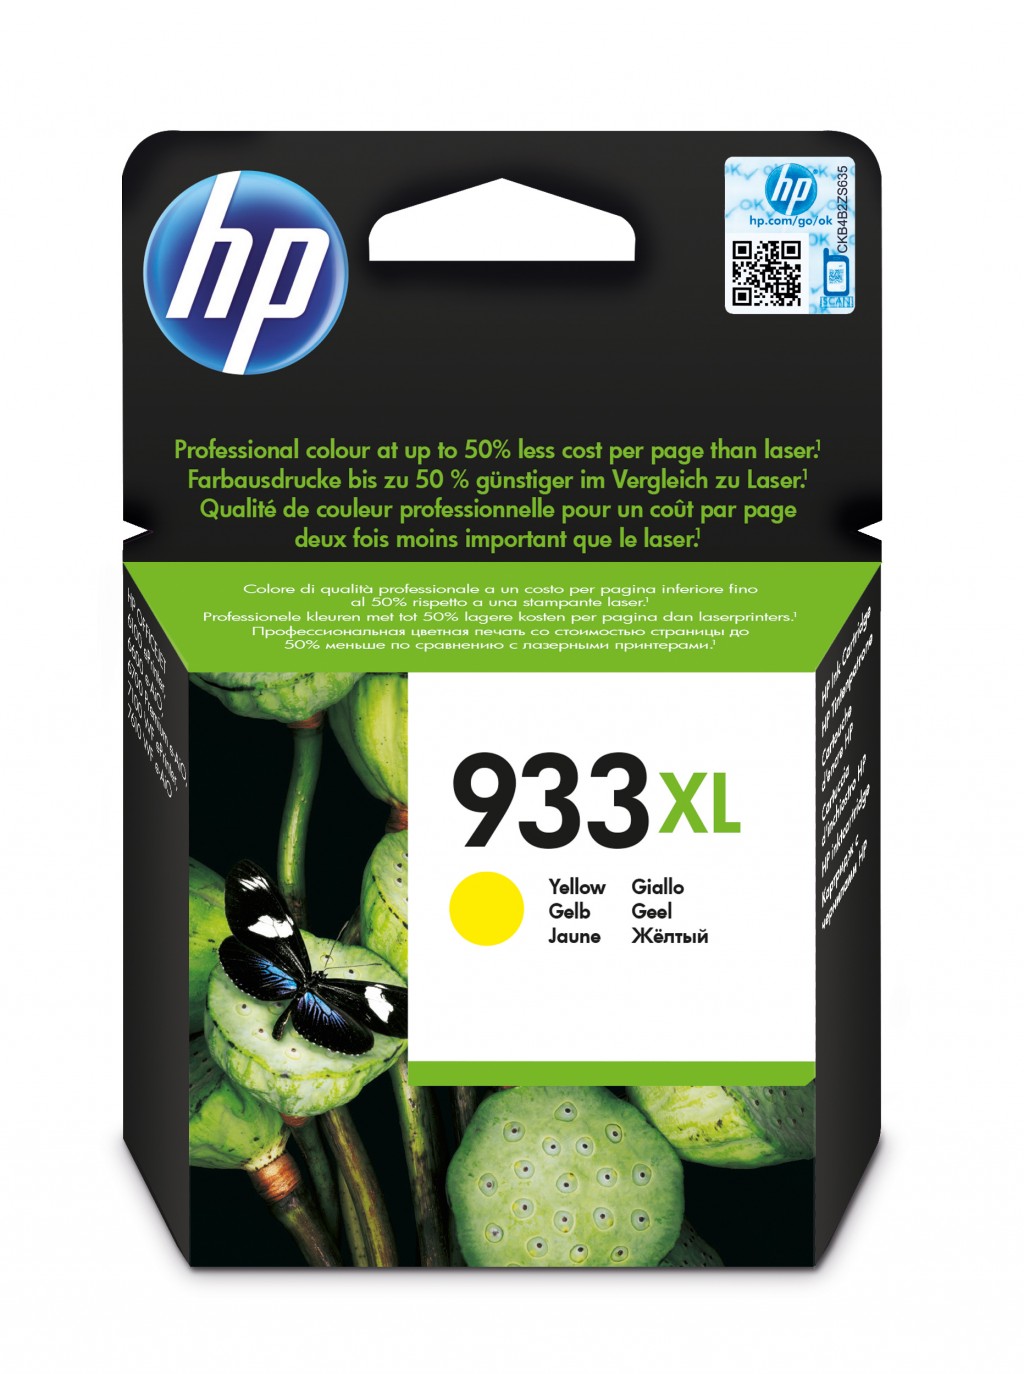 HP 933XL ink yellow Officejet 6700